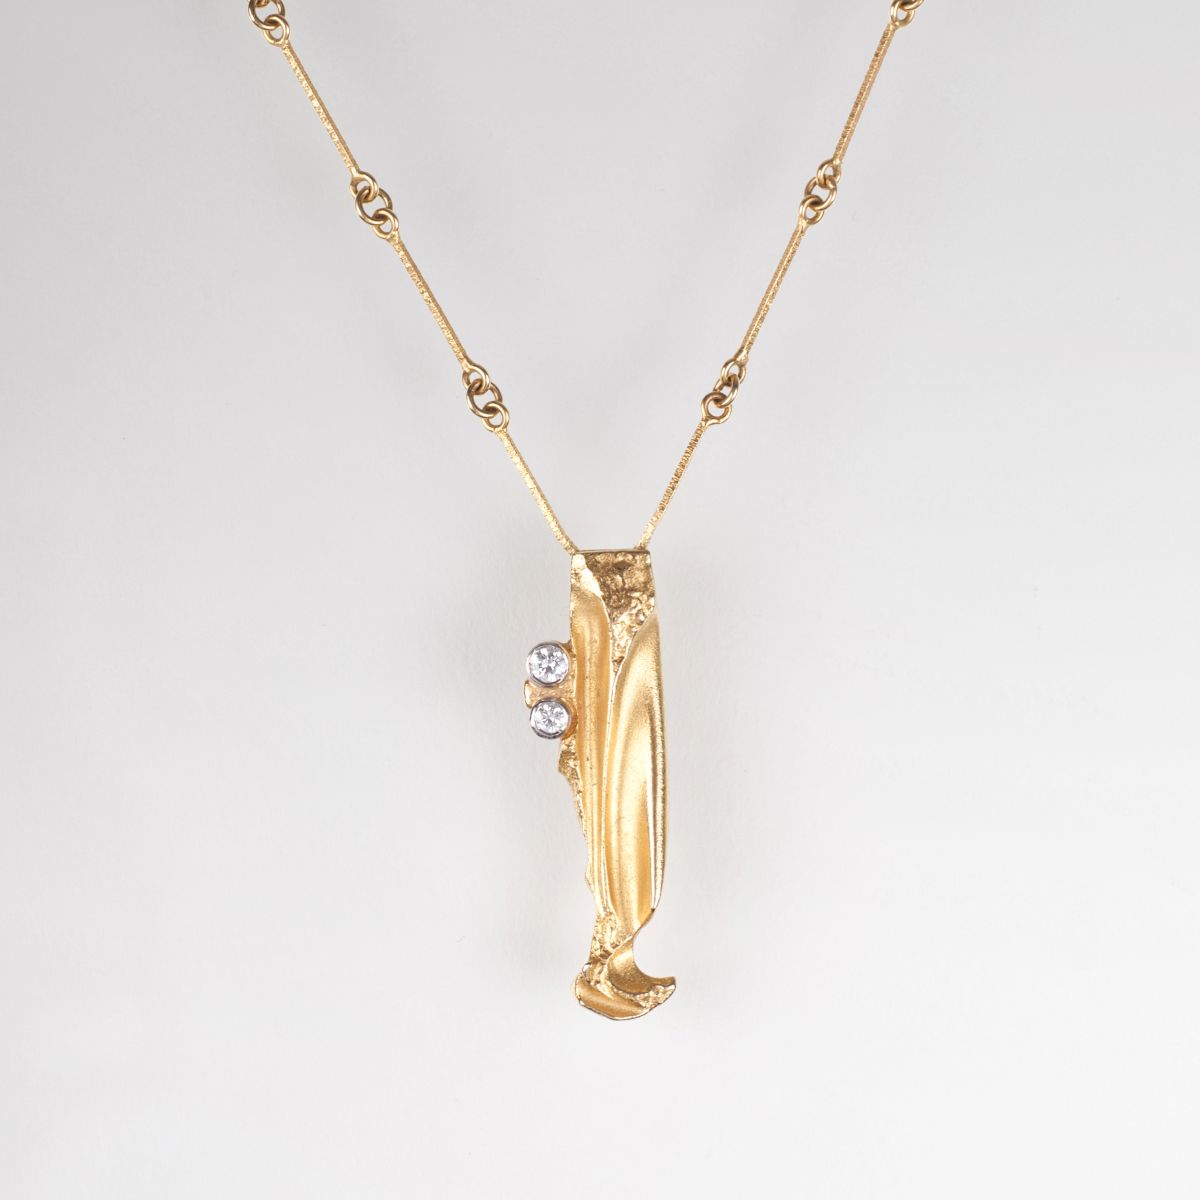 A modern necklace with pendant by Björn Weckström